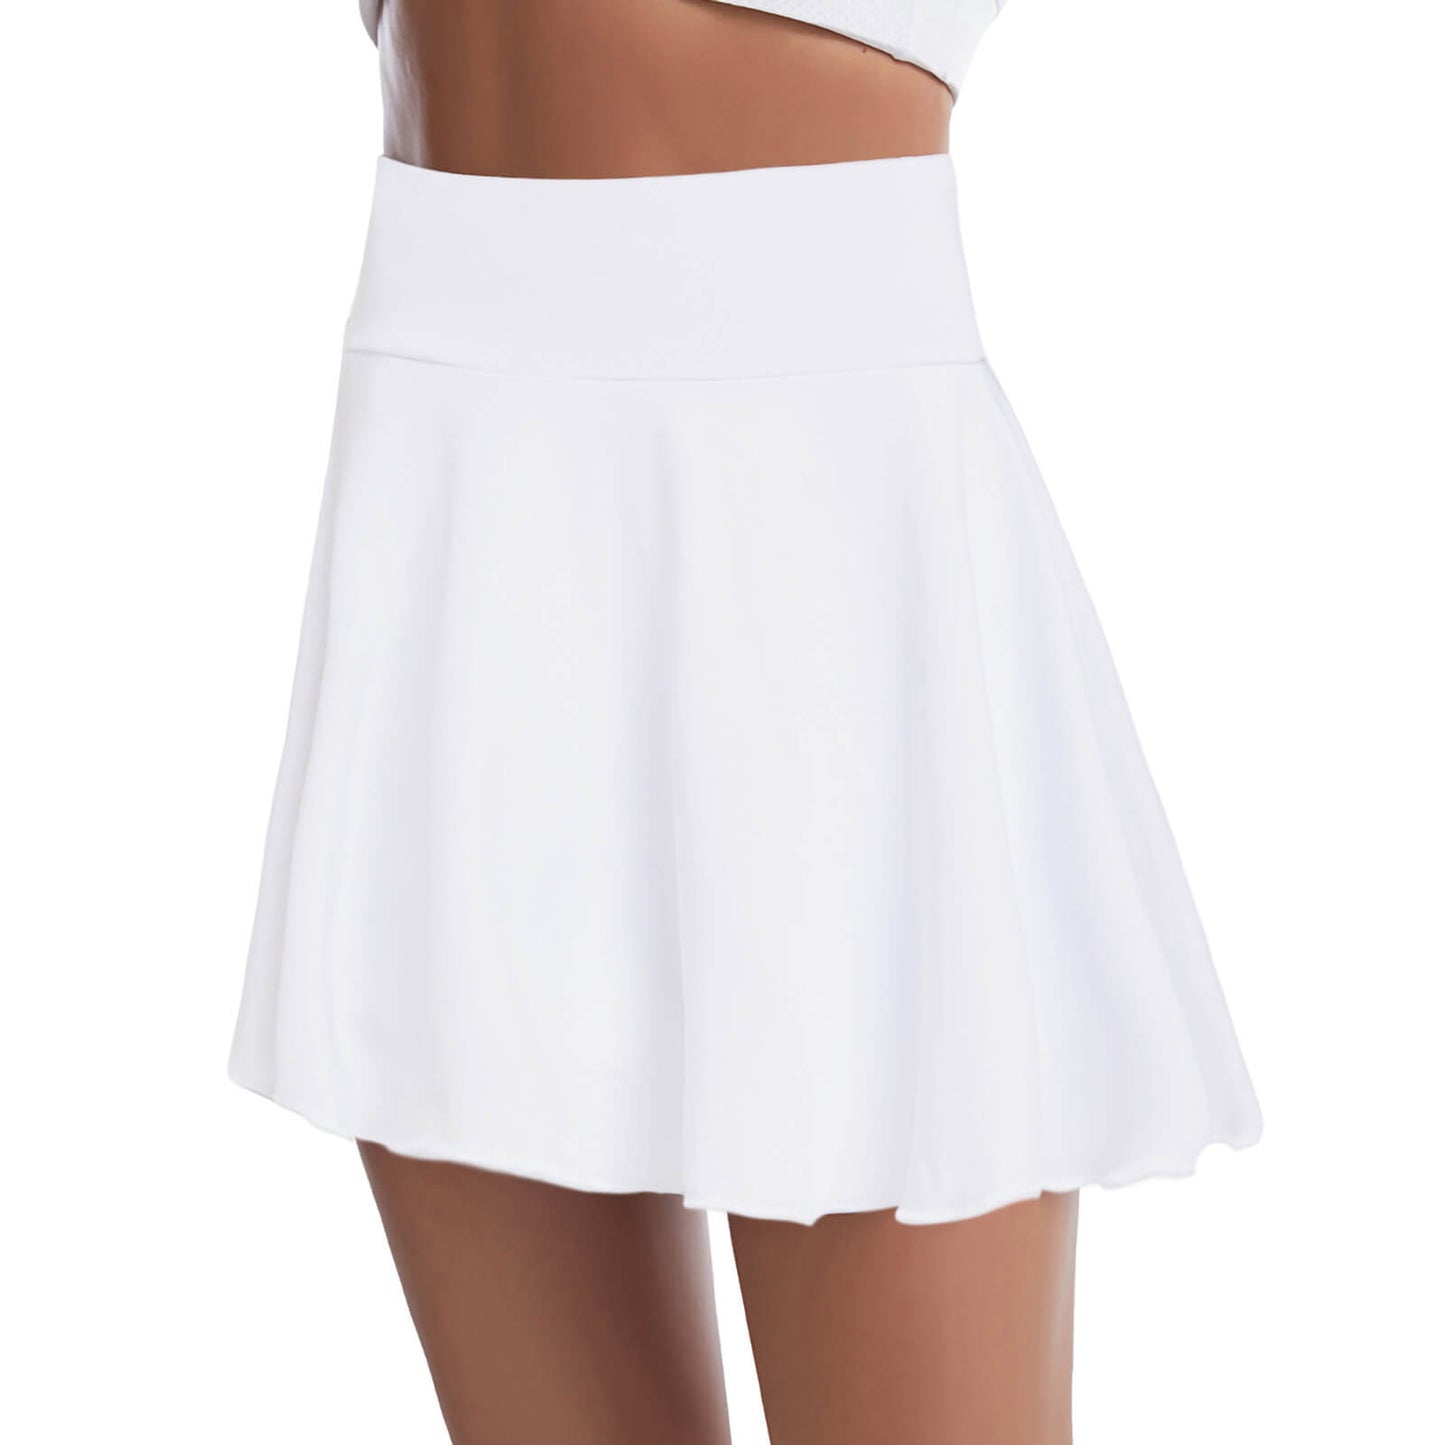 White Tennis Short Skirts